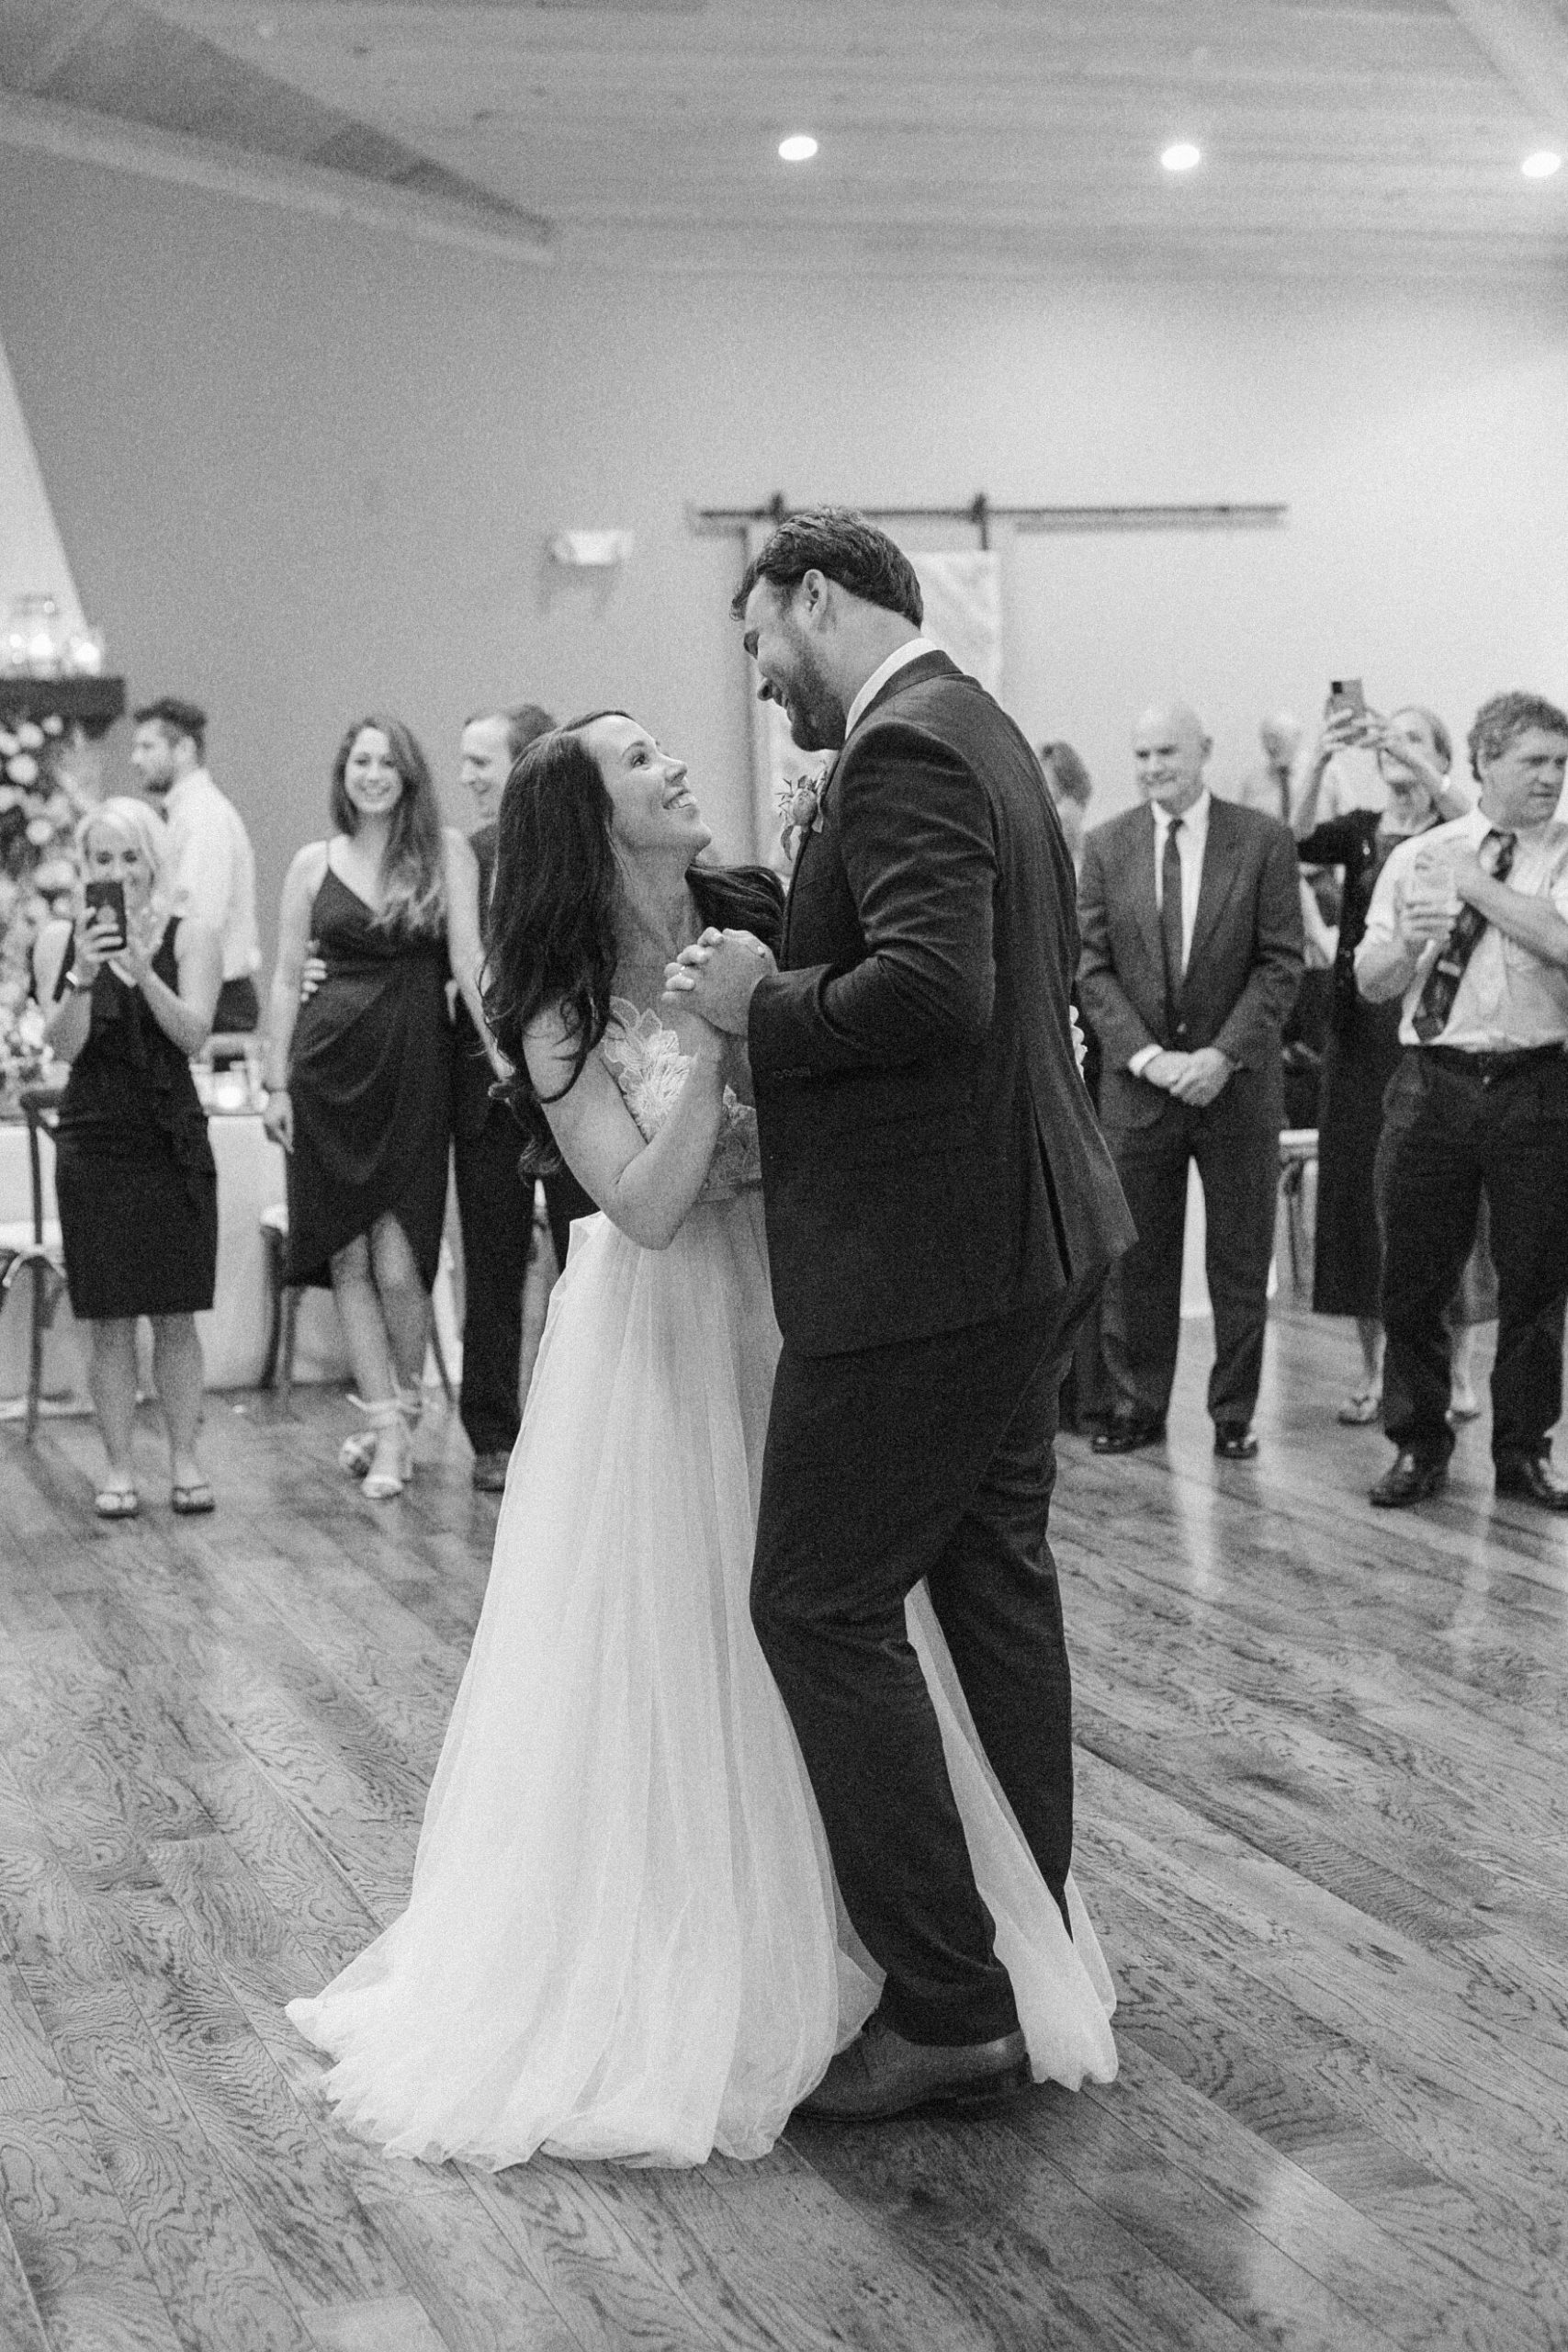 Couple shares first dance during luxury Charleston wedding